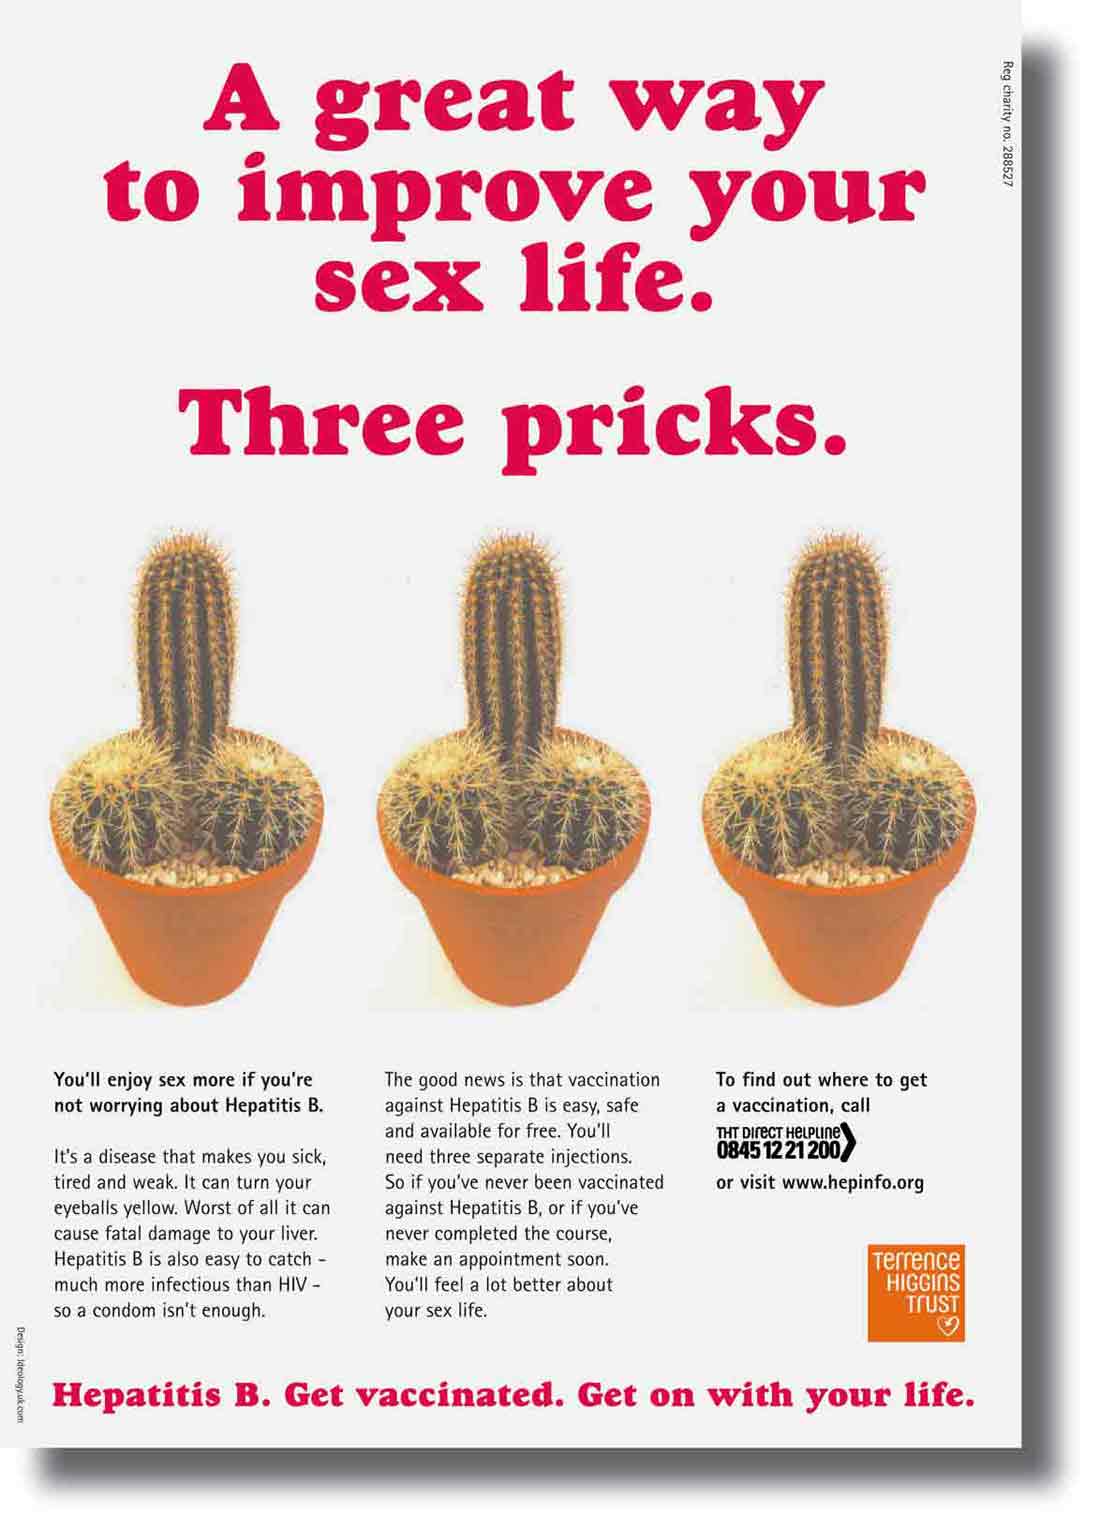 Terence Higgins Trust Hepatitis B "Three Pricks" campaign poster designed by ideology.uk.com